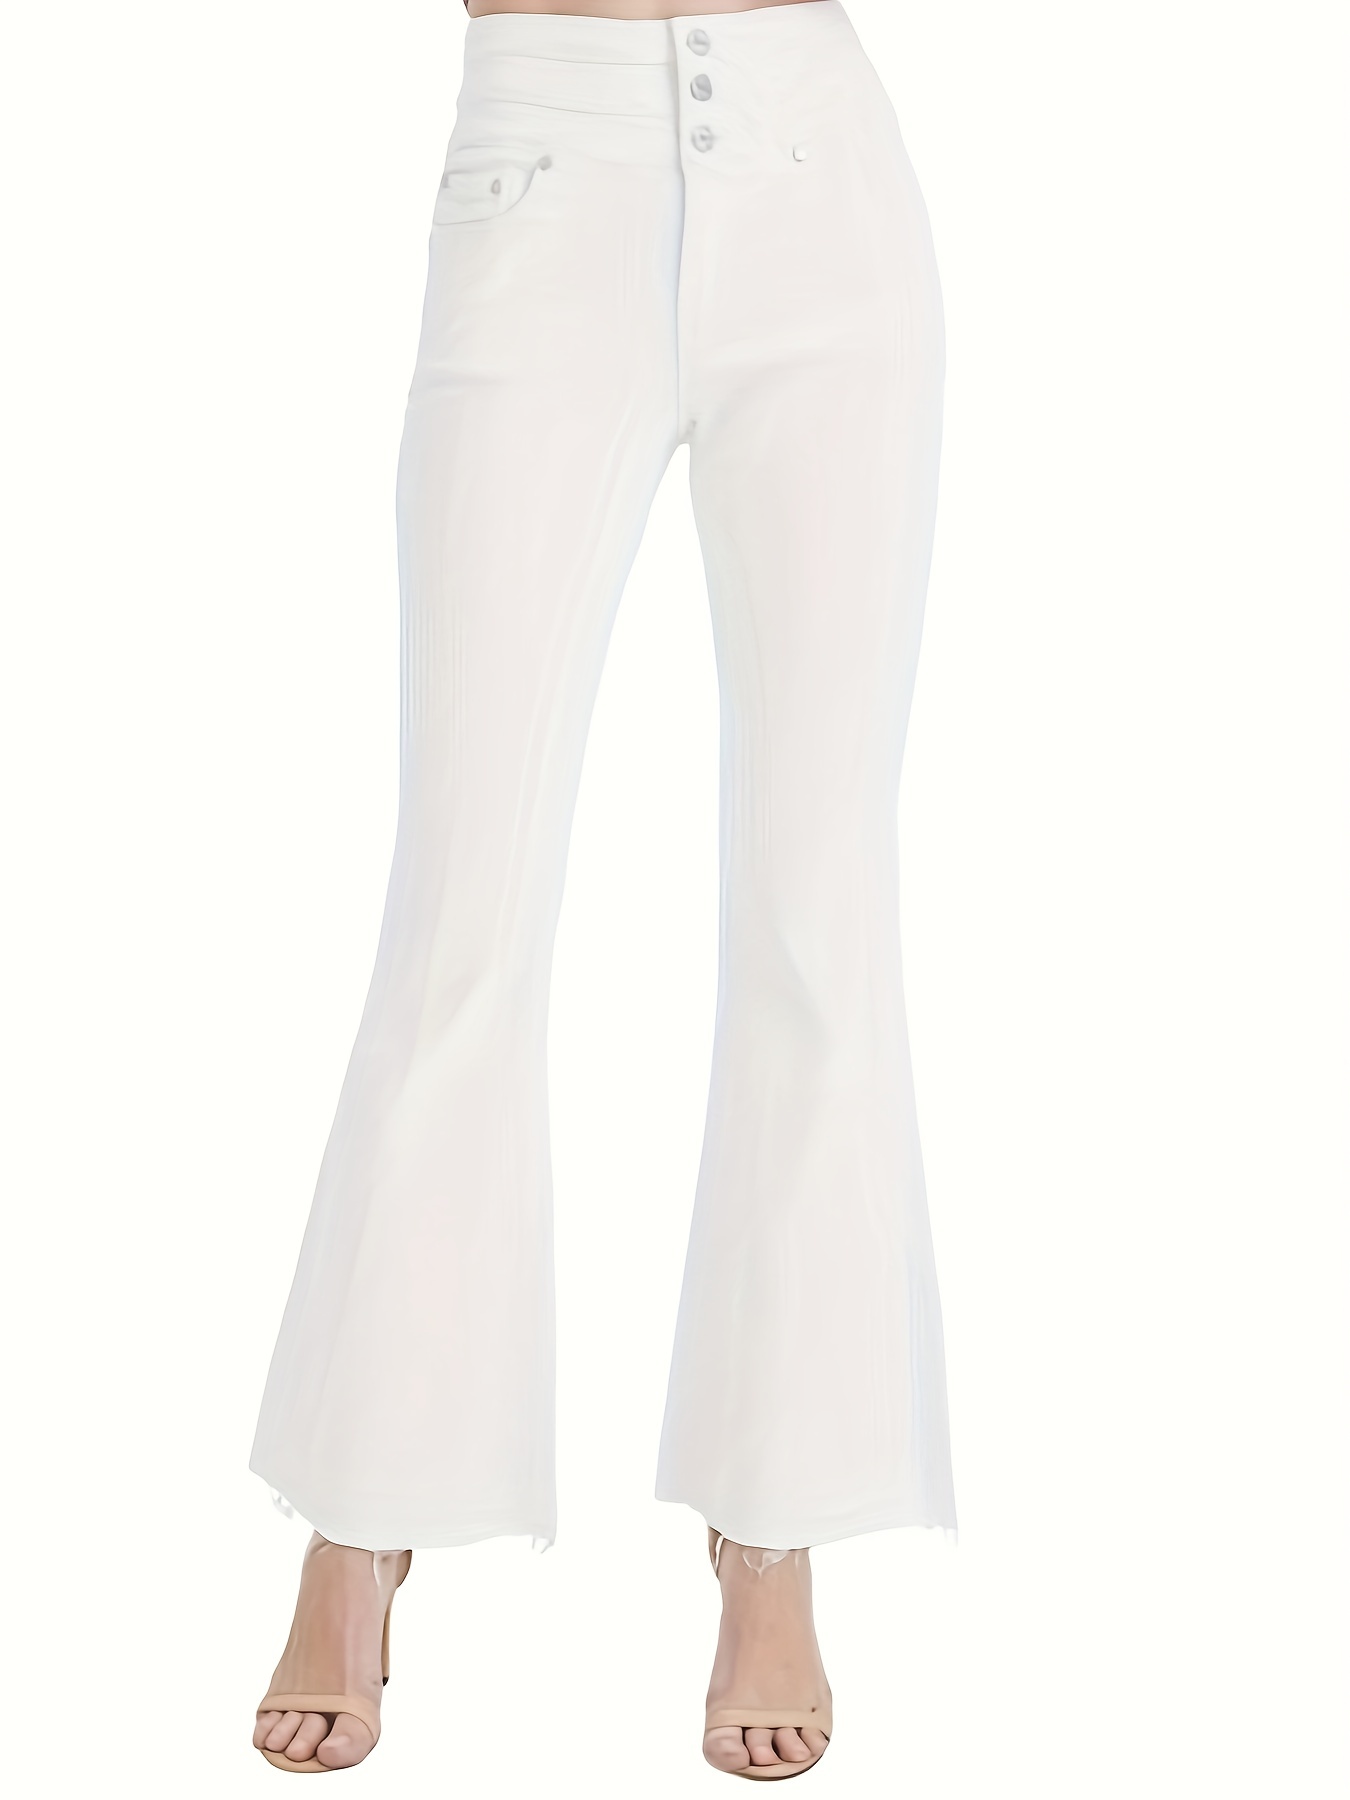 Calça Jeans Flare Feminina Modeladora Cintura Alta e Beleza